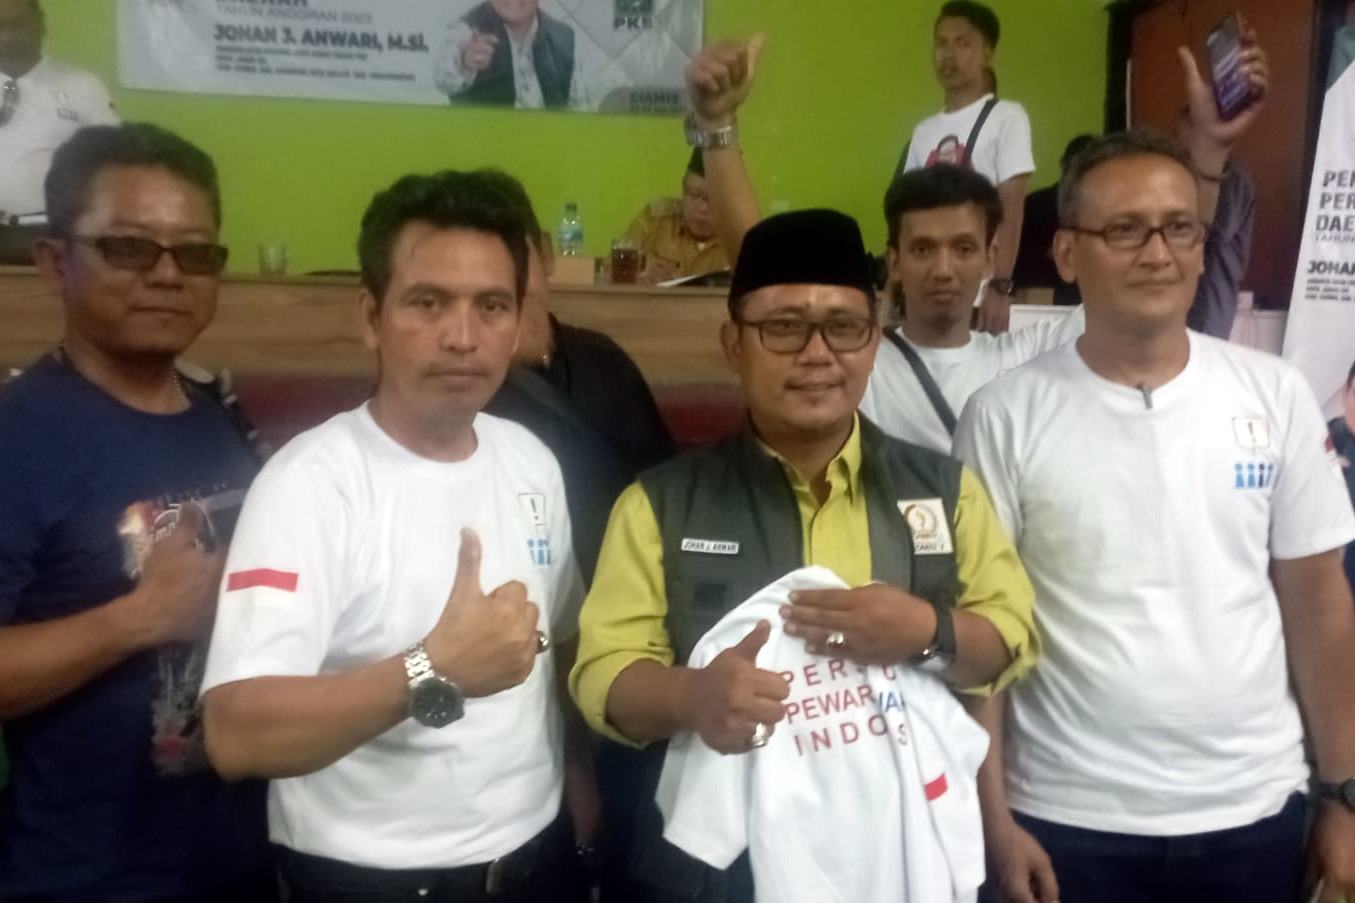 Anggota DPRD Jabar Fraksi PKB Johan J. Anwari Sosialisasikan Perda Perlindungan Anak di Desa Cisadap Kab. Ciamis 1